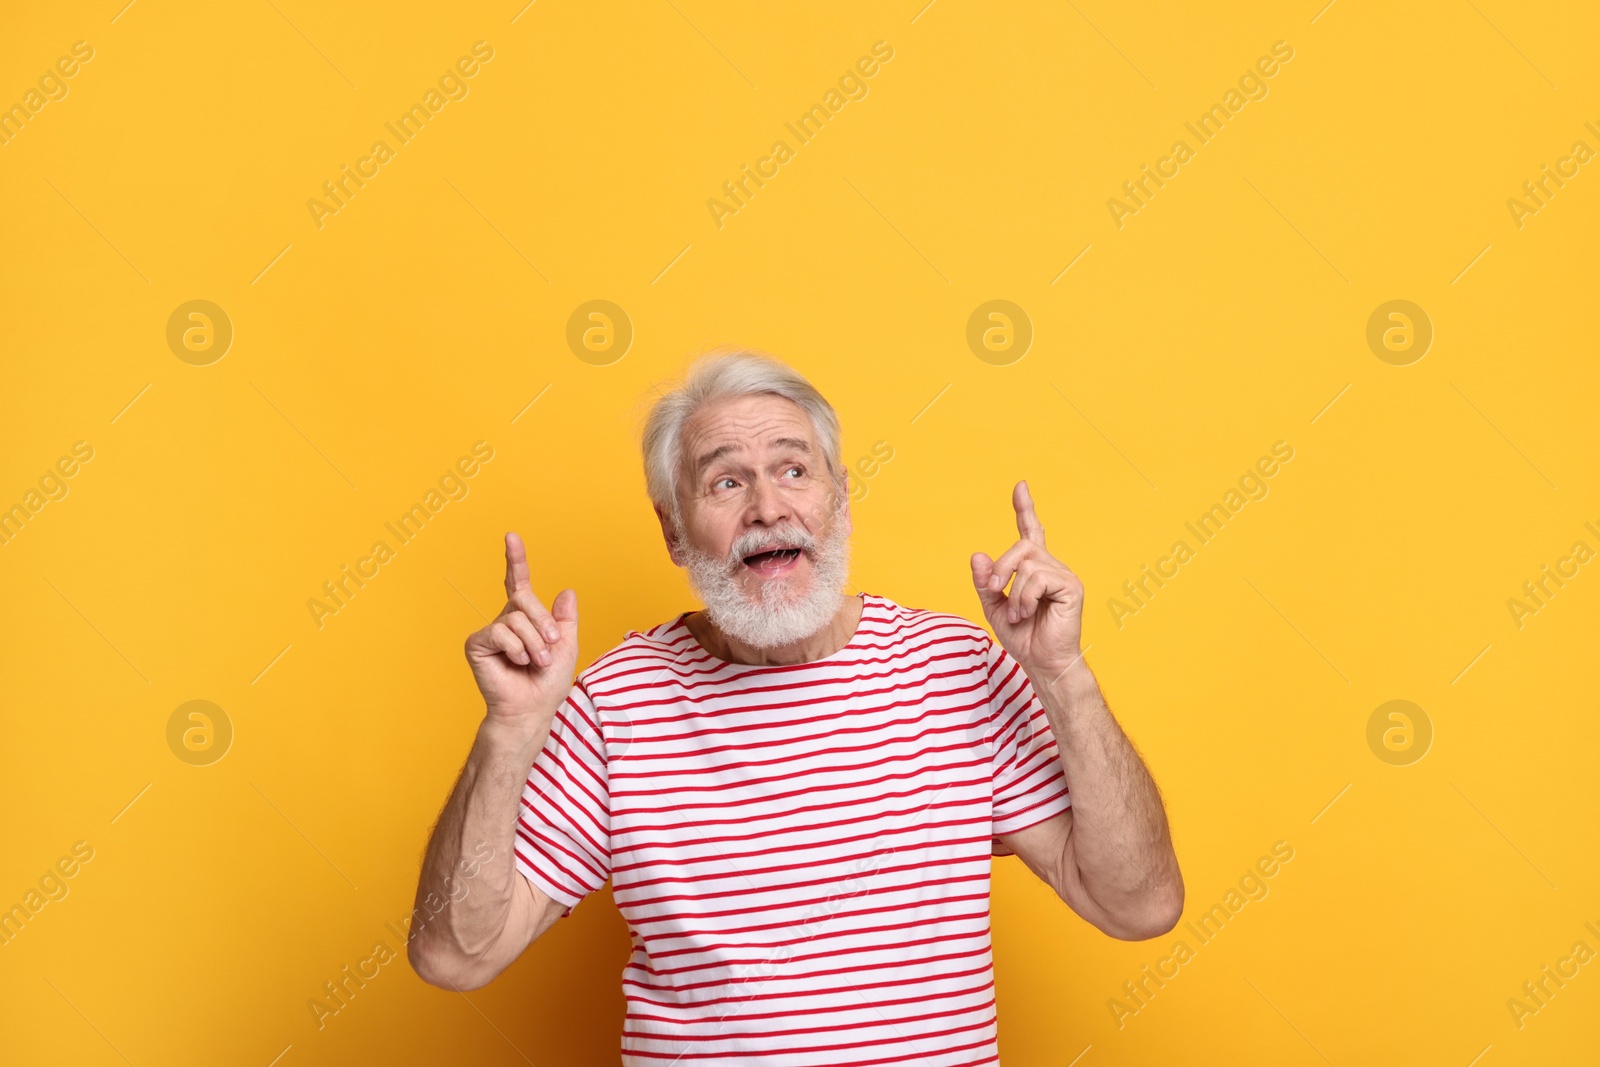 Photo of Senior man with mustache pointing at something on orange background